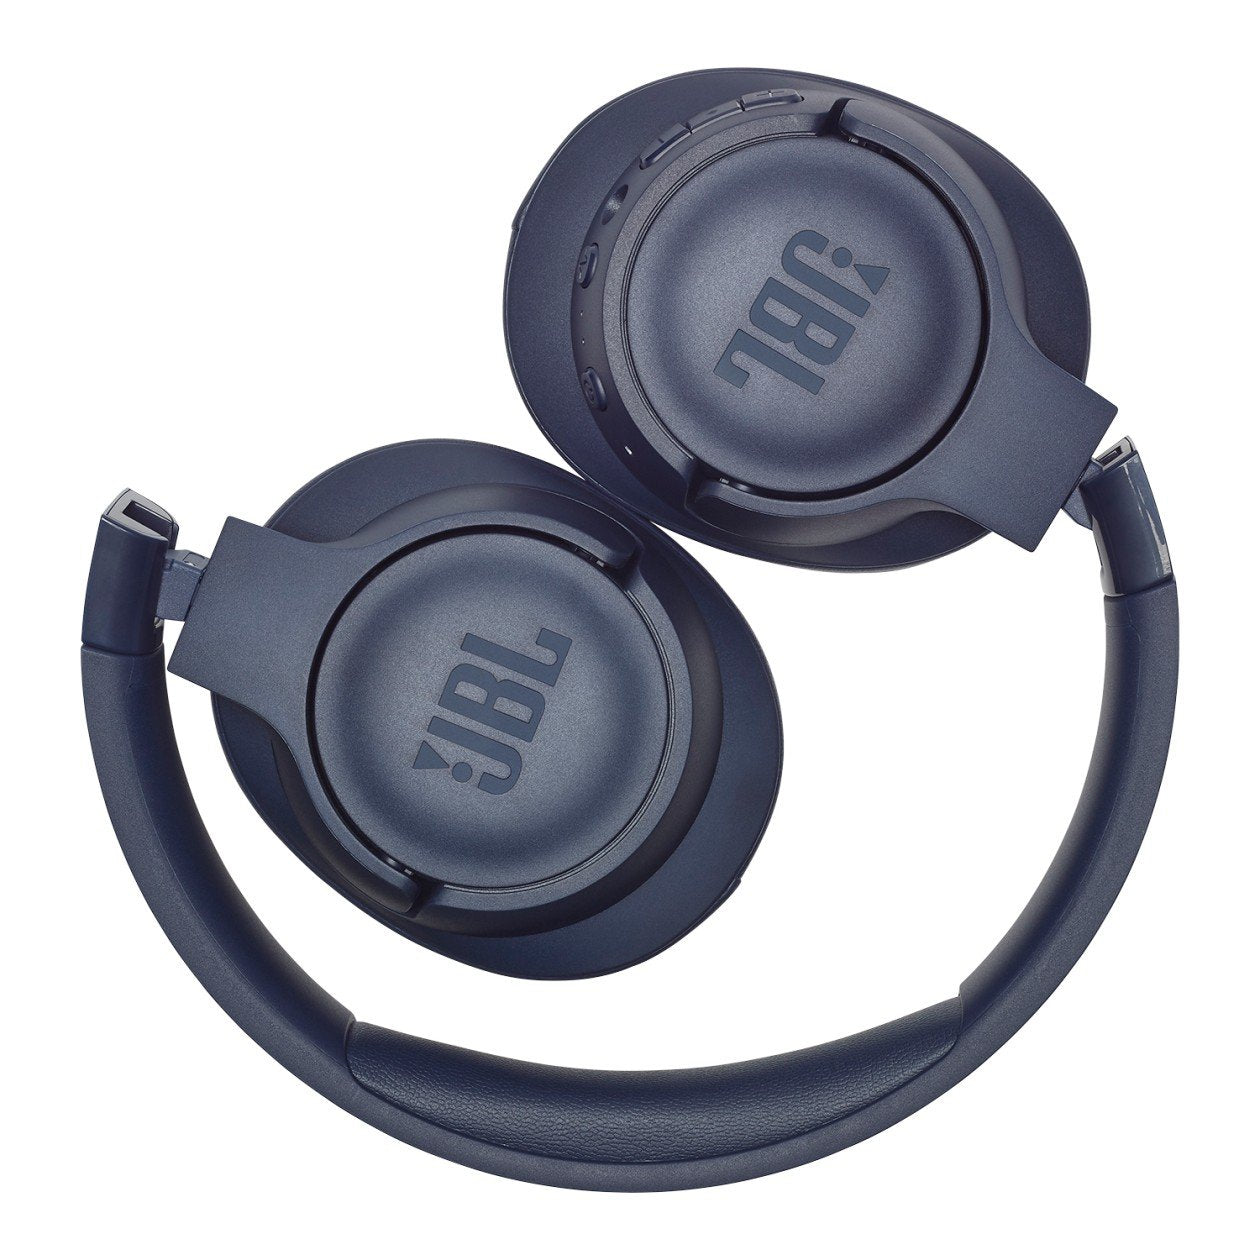 JBL T750 Over-Ear Noise-Cancelling Wireless Headphone - Blue